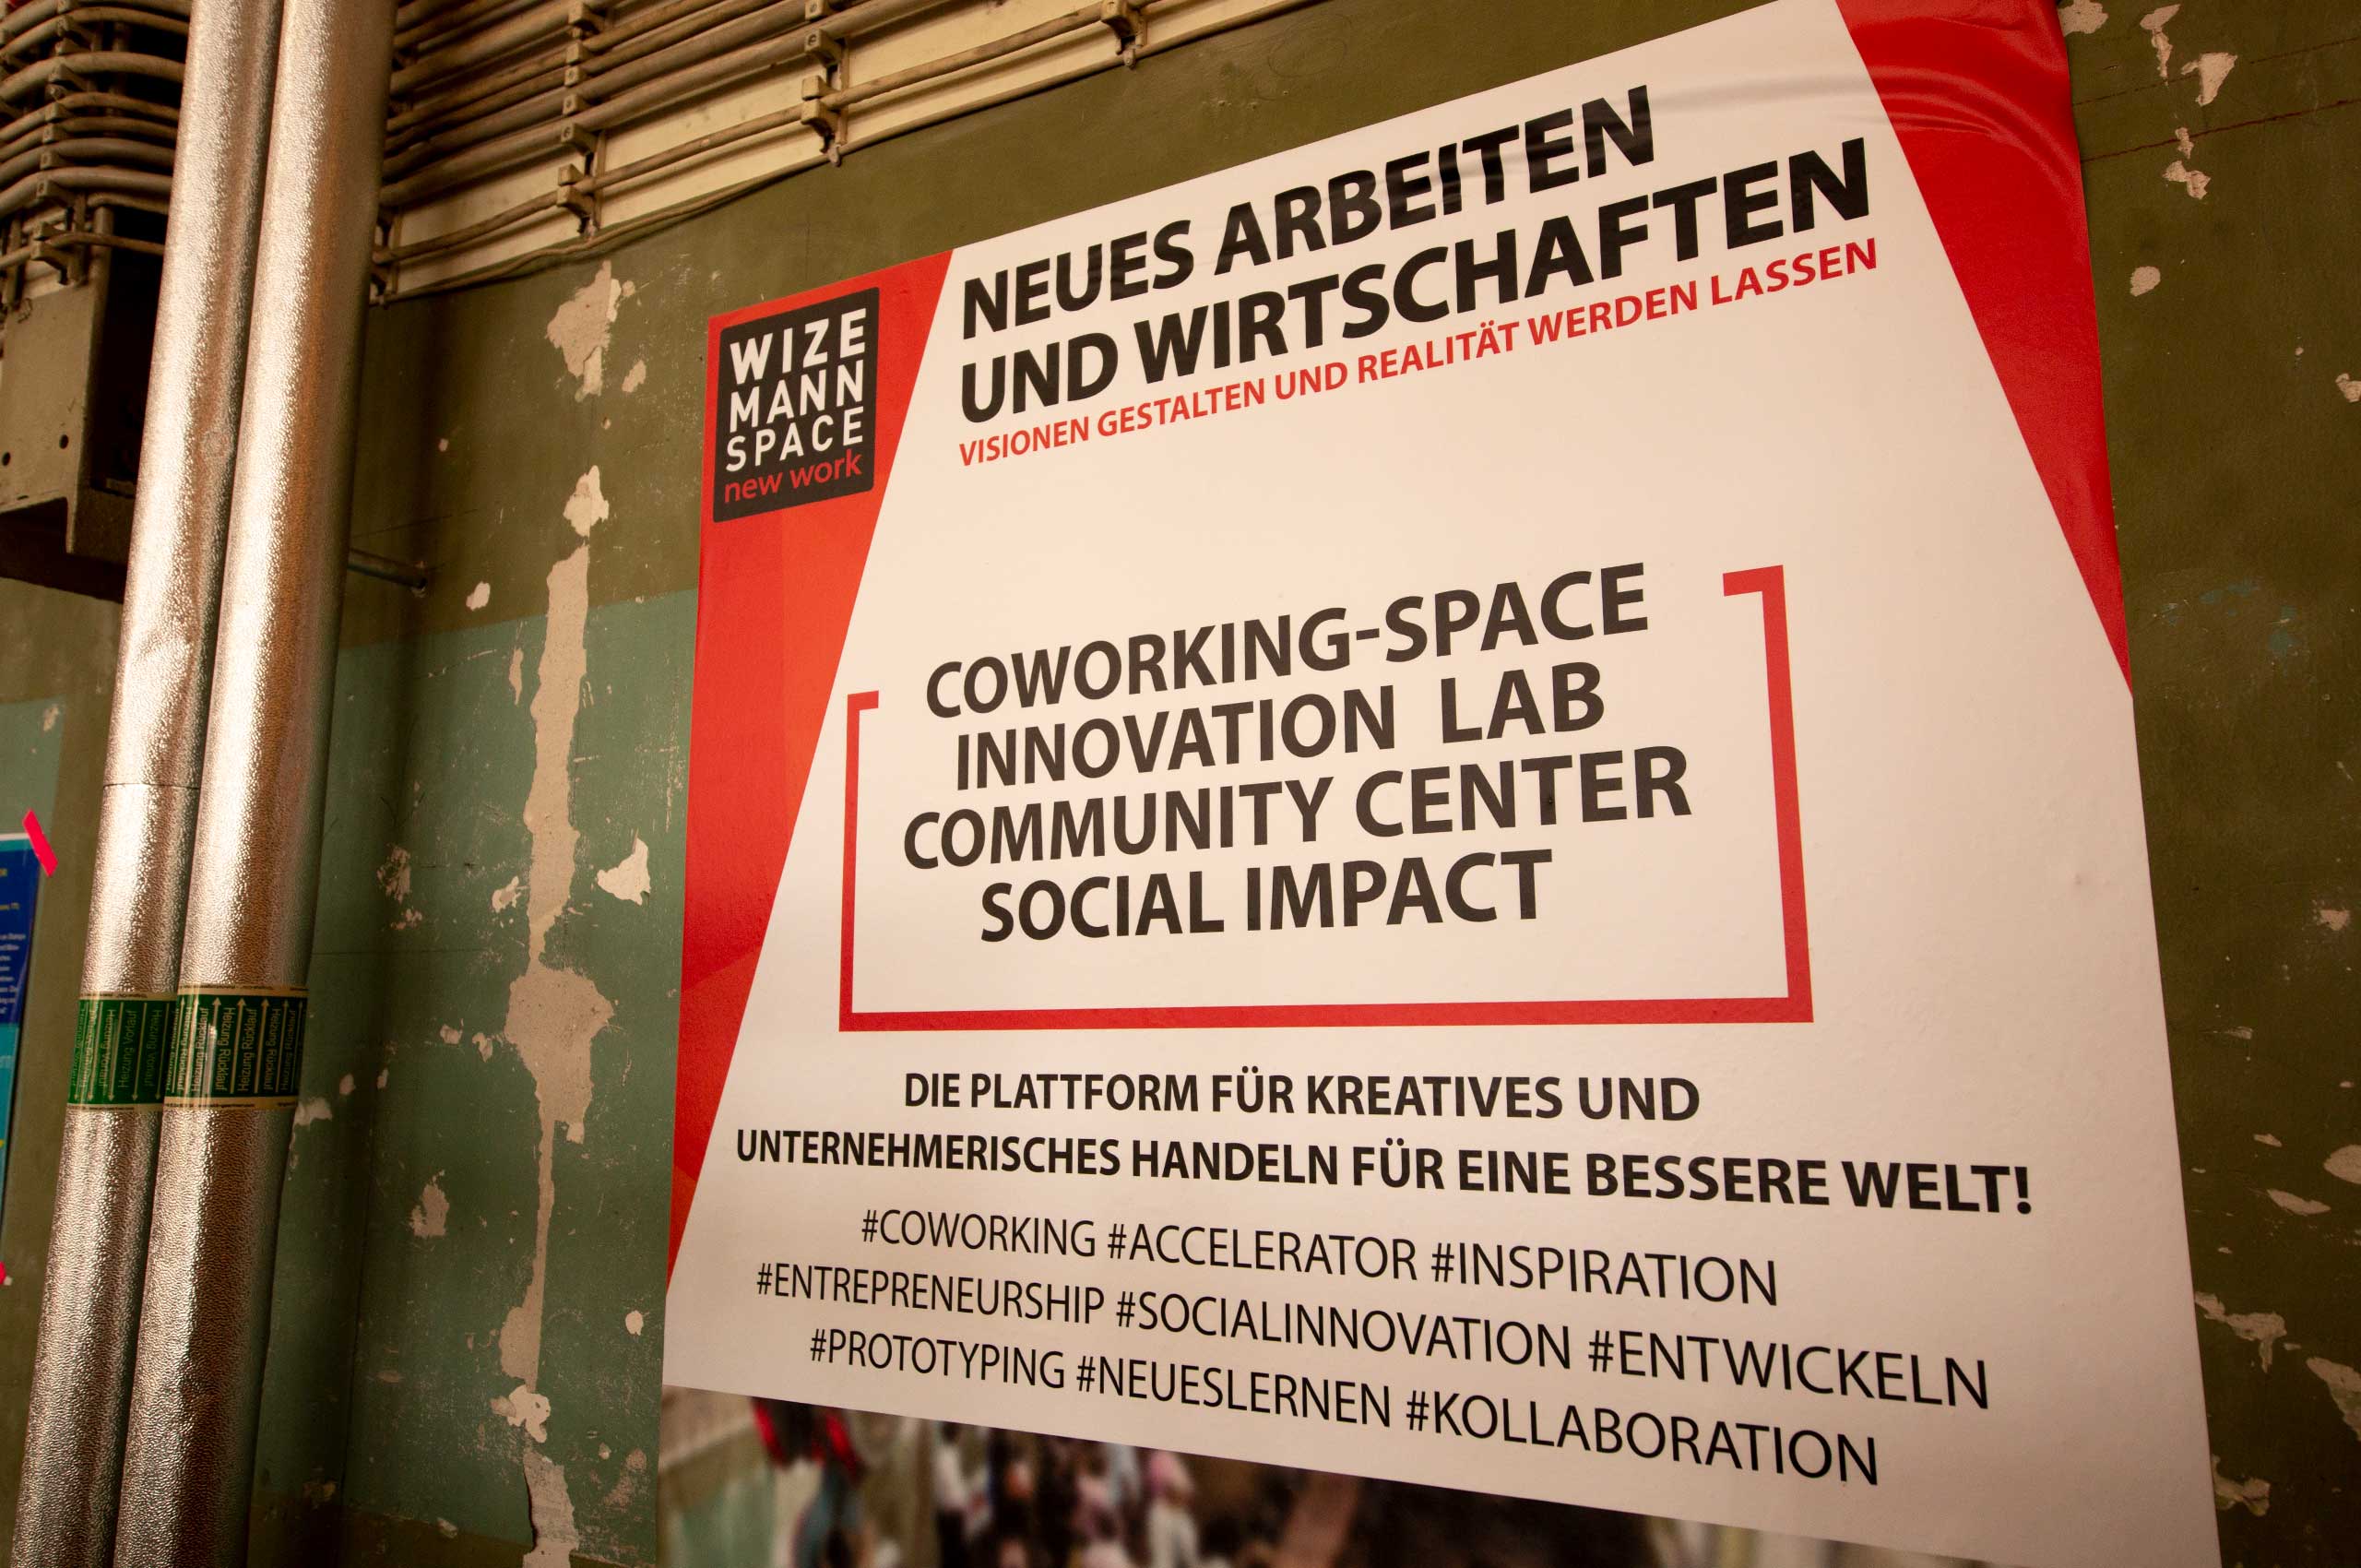 Wizemann.Space / Social Impact Hub Stuttgart. Bild: cc Franziska Köppe | madiko